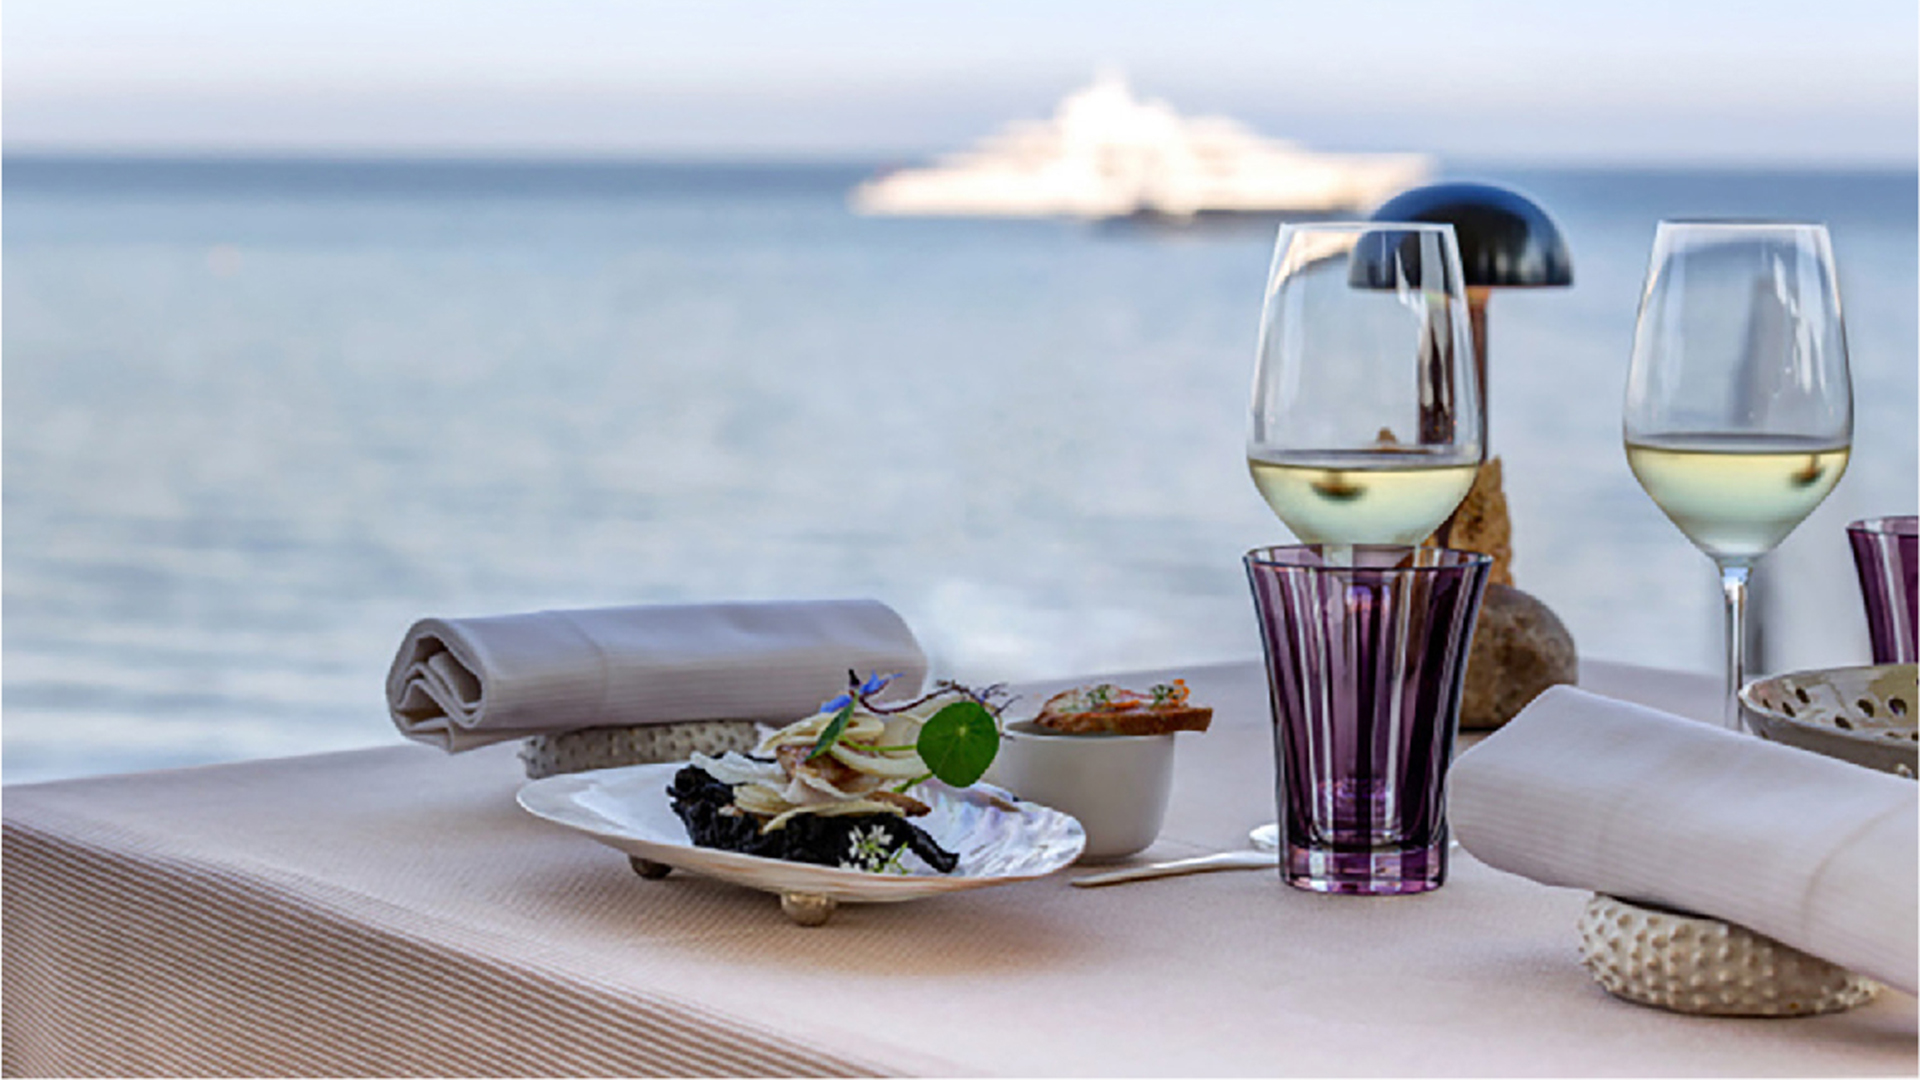 Seaside dining